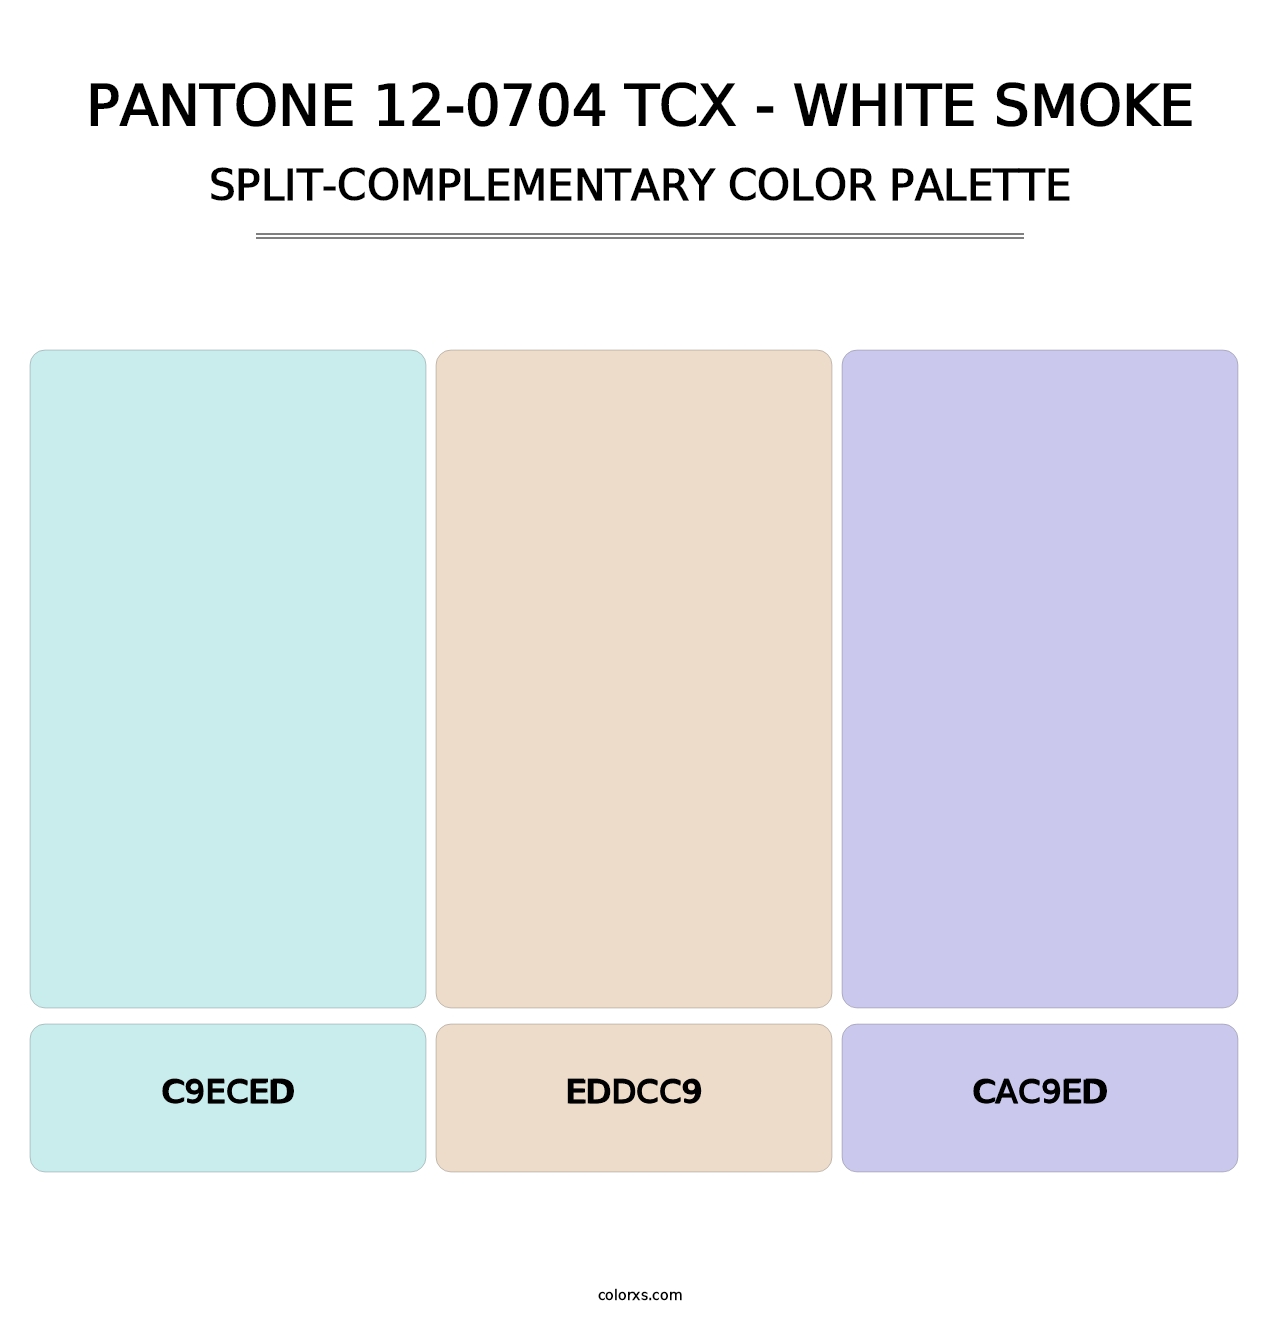 PANTONE 12-0704 TCX - White Smoke - Split-Complementary Color Palette